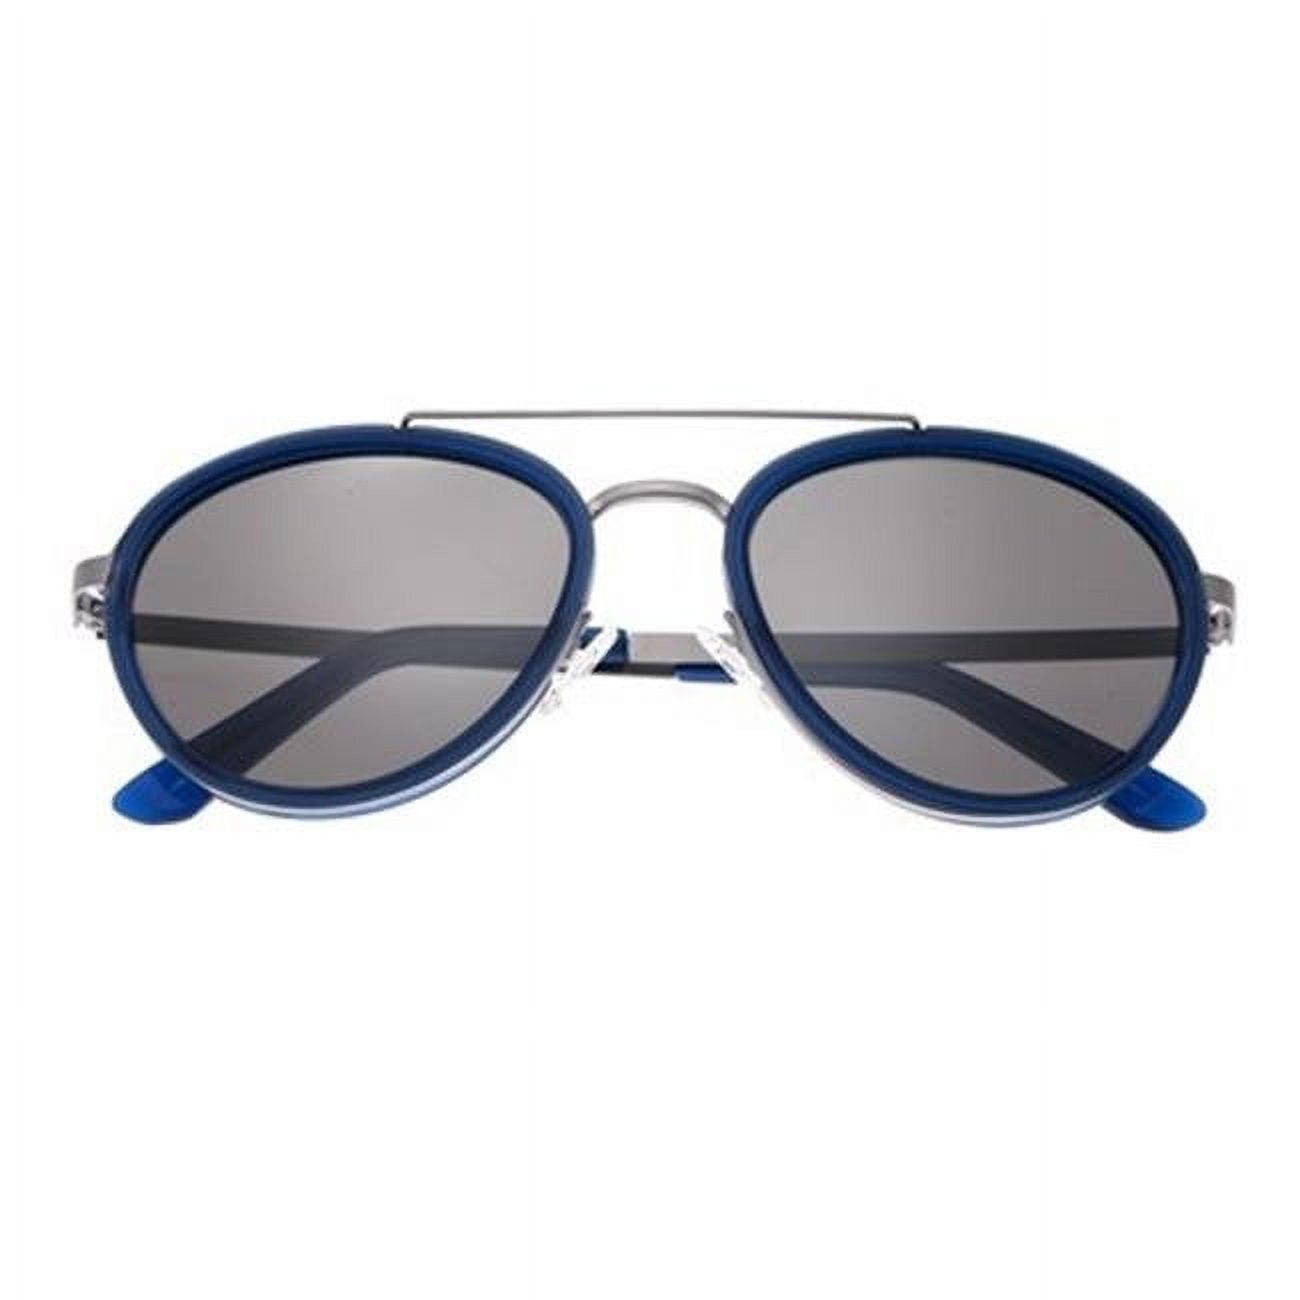 Breed Sunglasses BSG038SL Mens Finlay Sunglasses - Blue - image 1 of 6